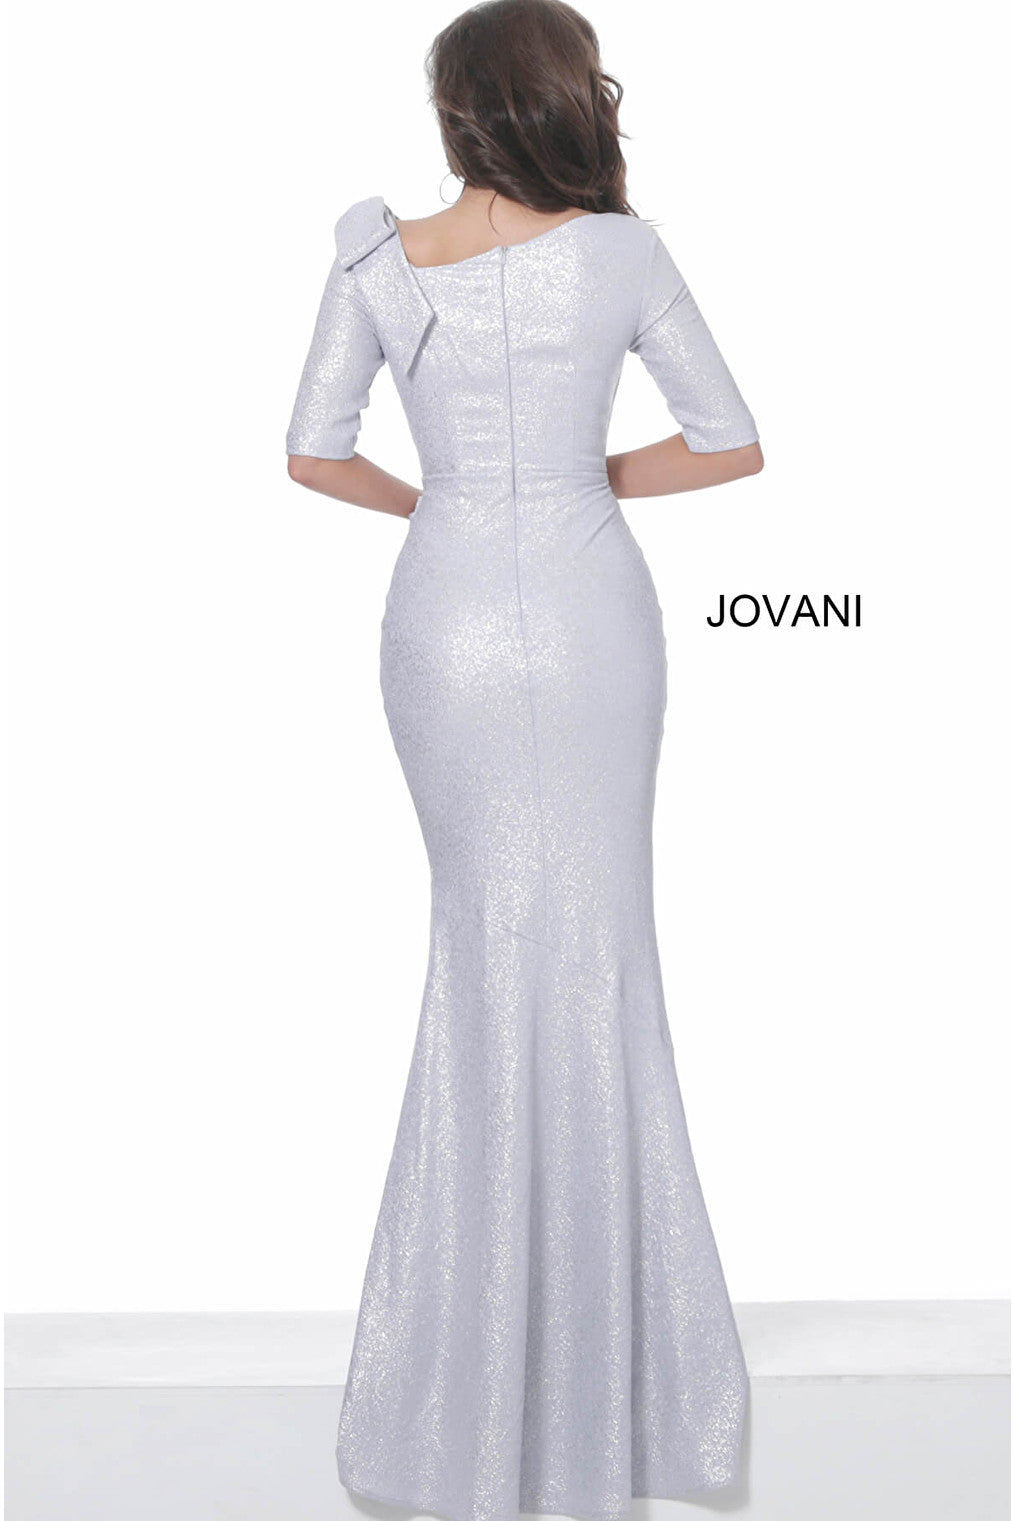 Jovani 03642 Silver Short Sleeve Ruched Evening Dress